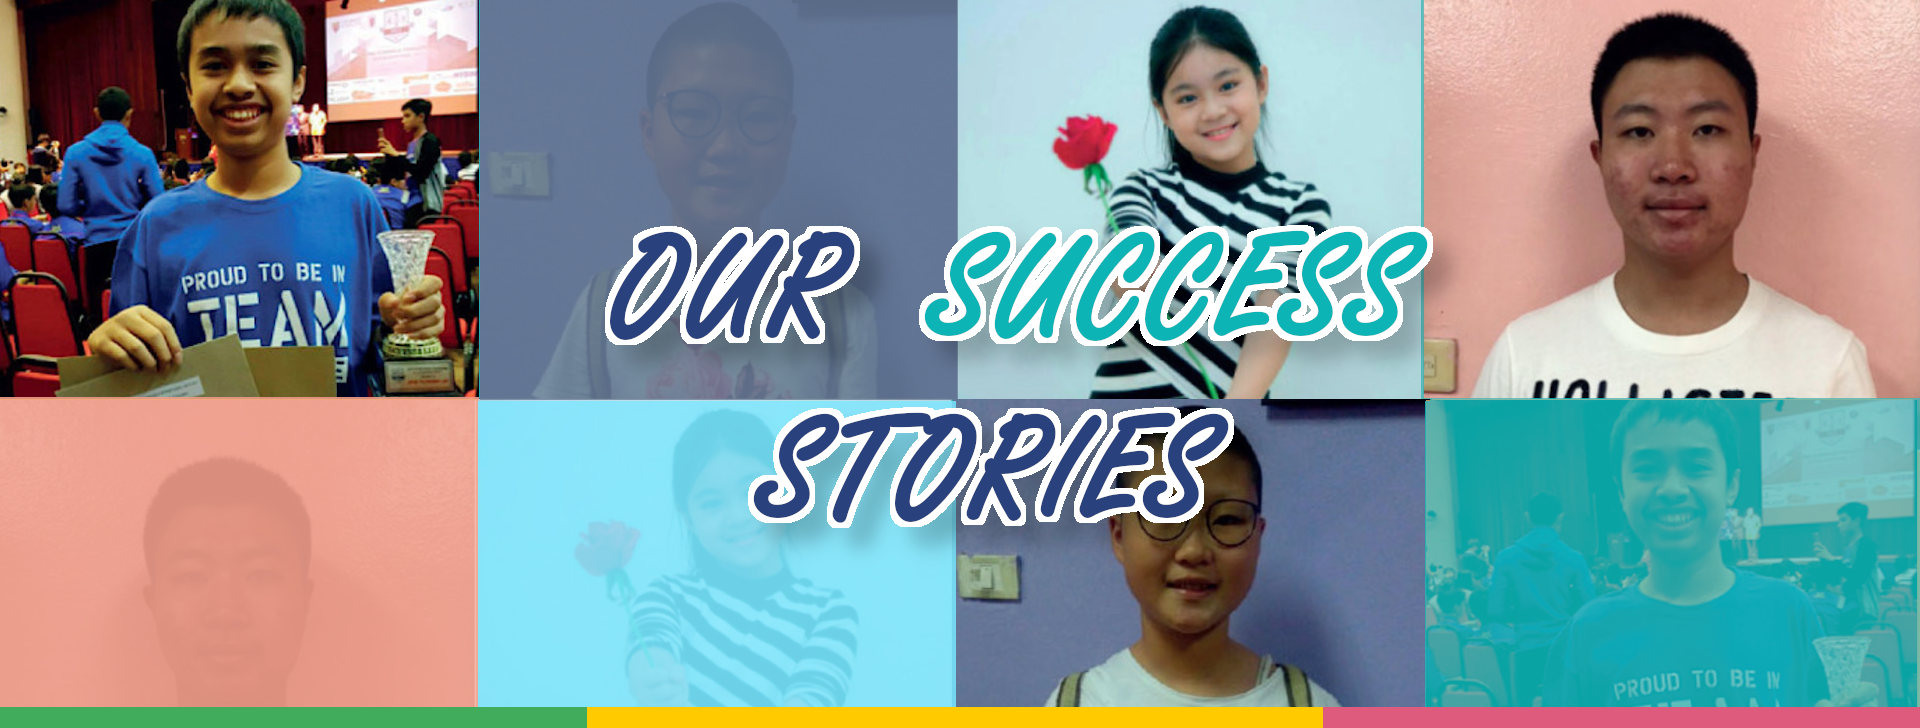 our success stories